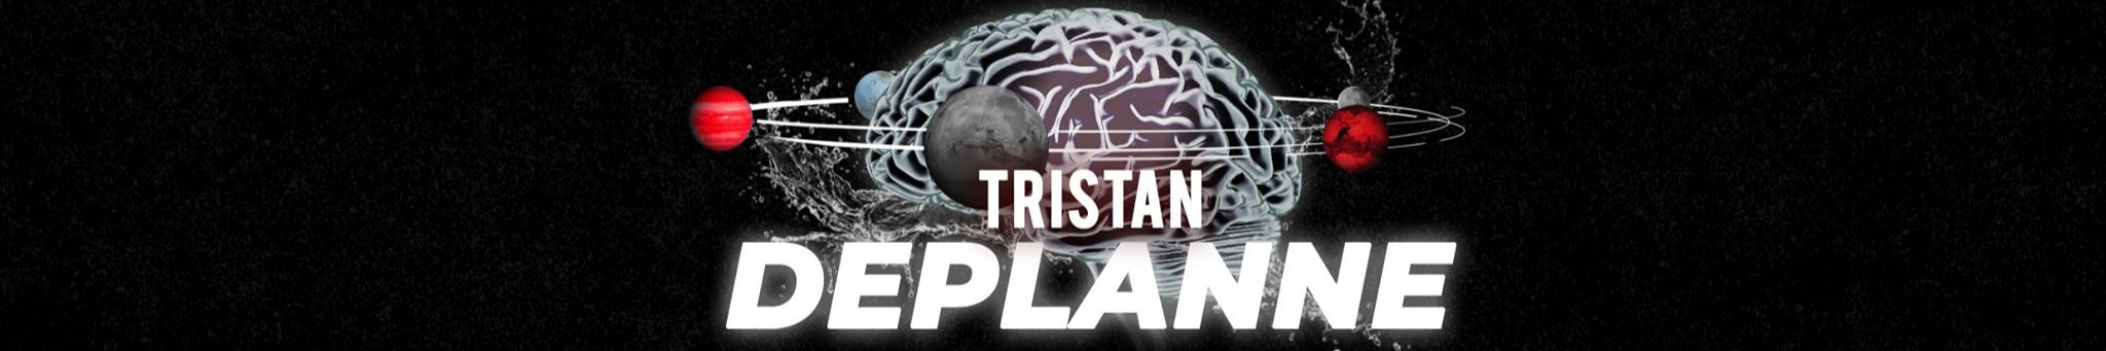 Tristan Deplanne